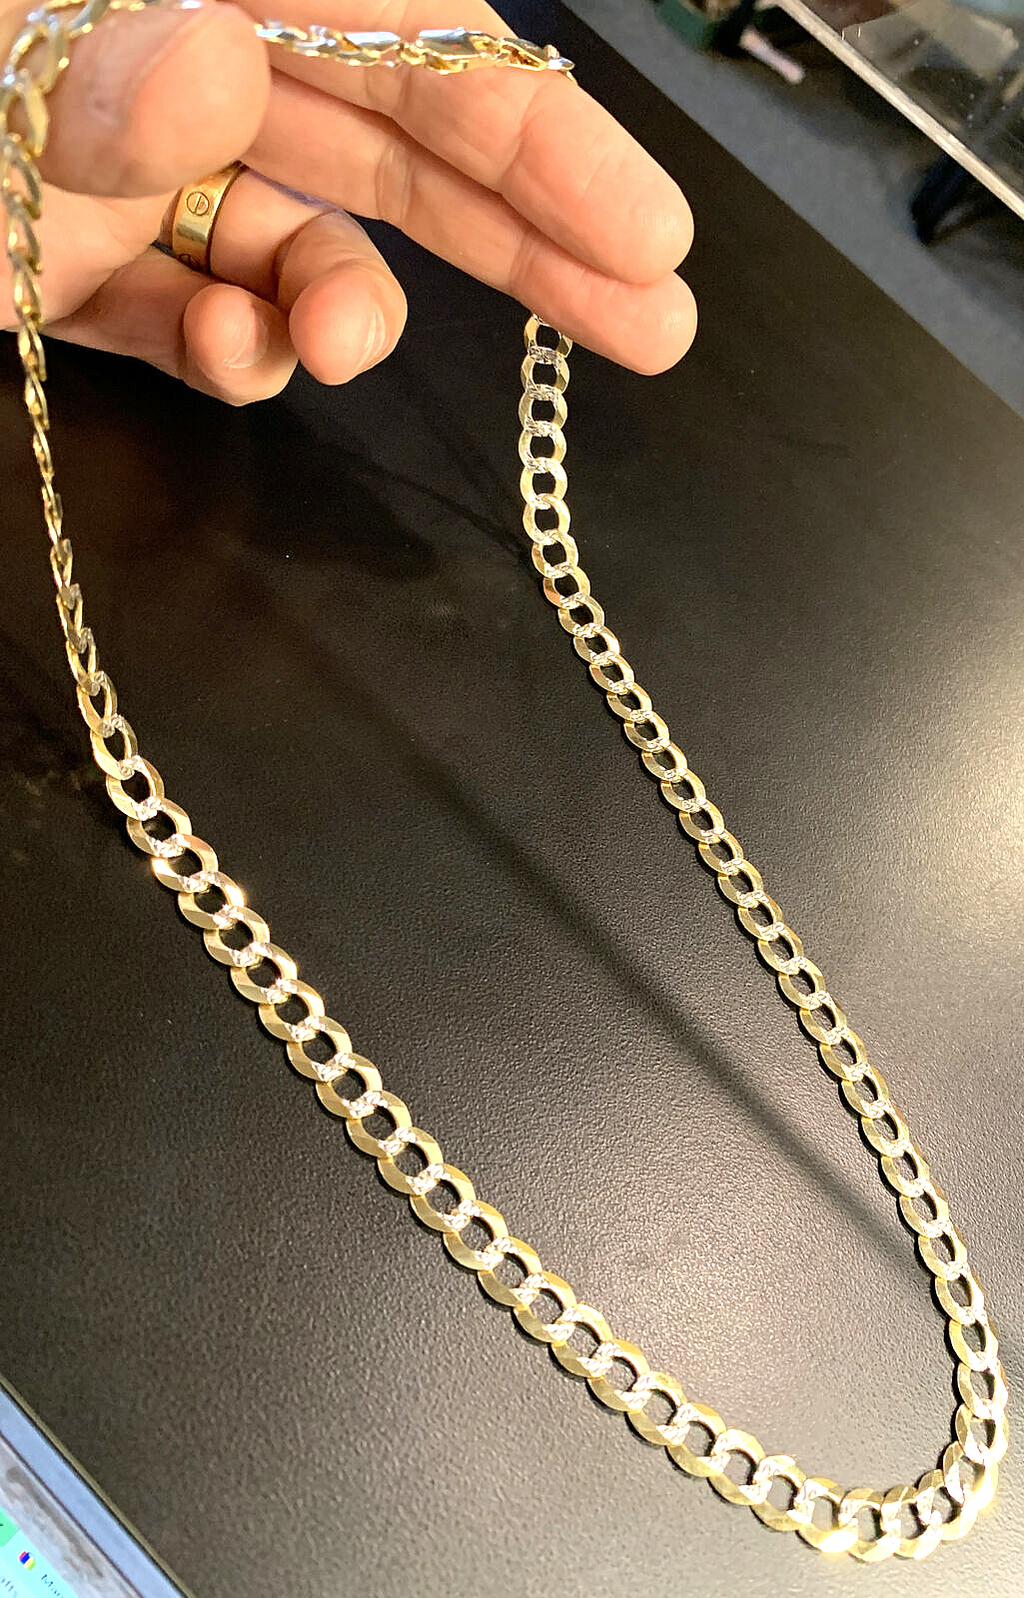 14k Solid RCJ Curb Link Chain w White 24" Inch, 36.7 grams, 8.5mm